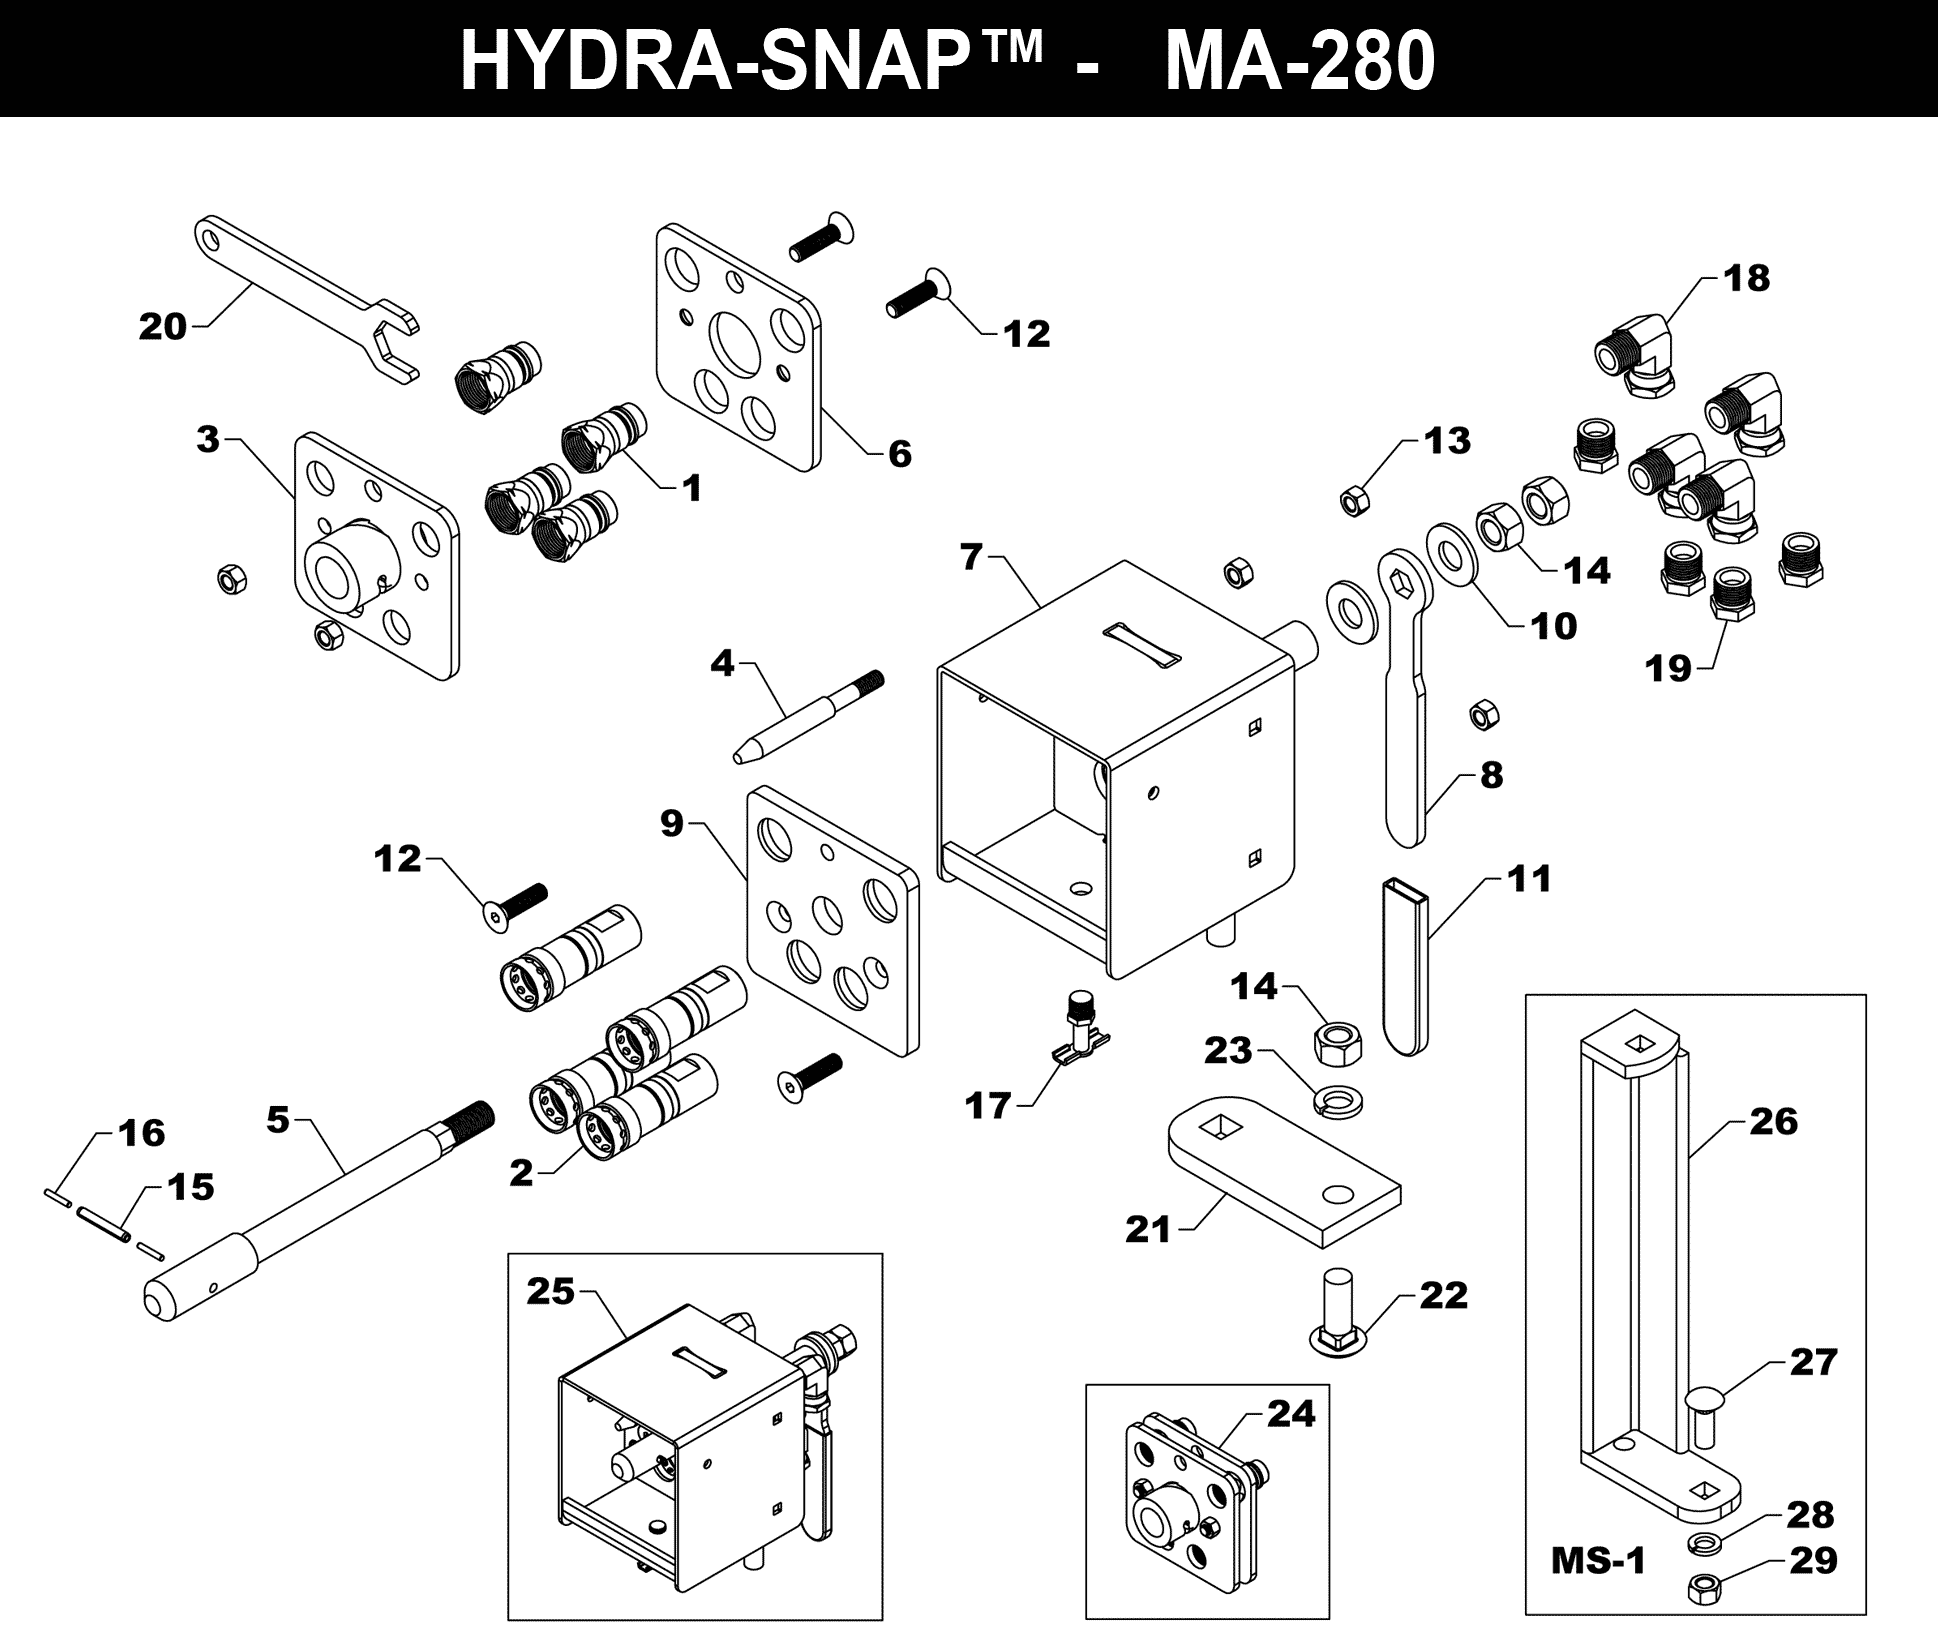 Hydra-Snap™ - MA-280